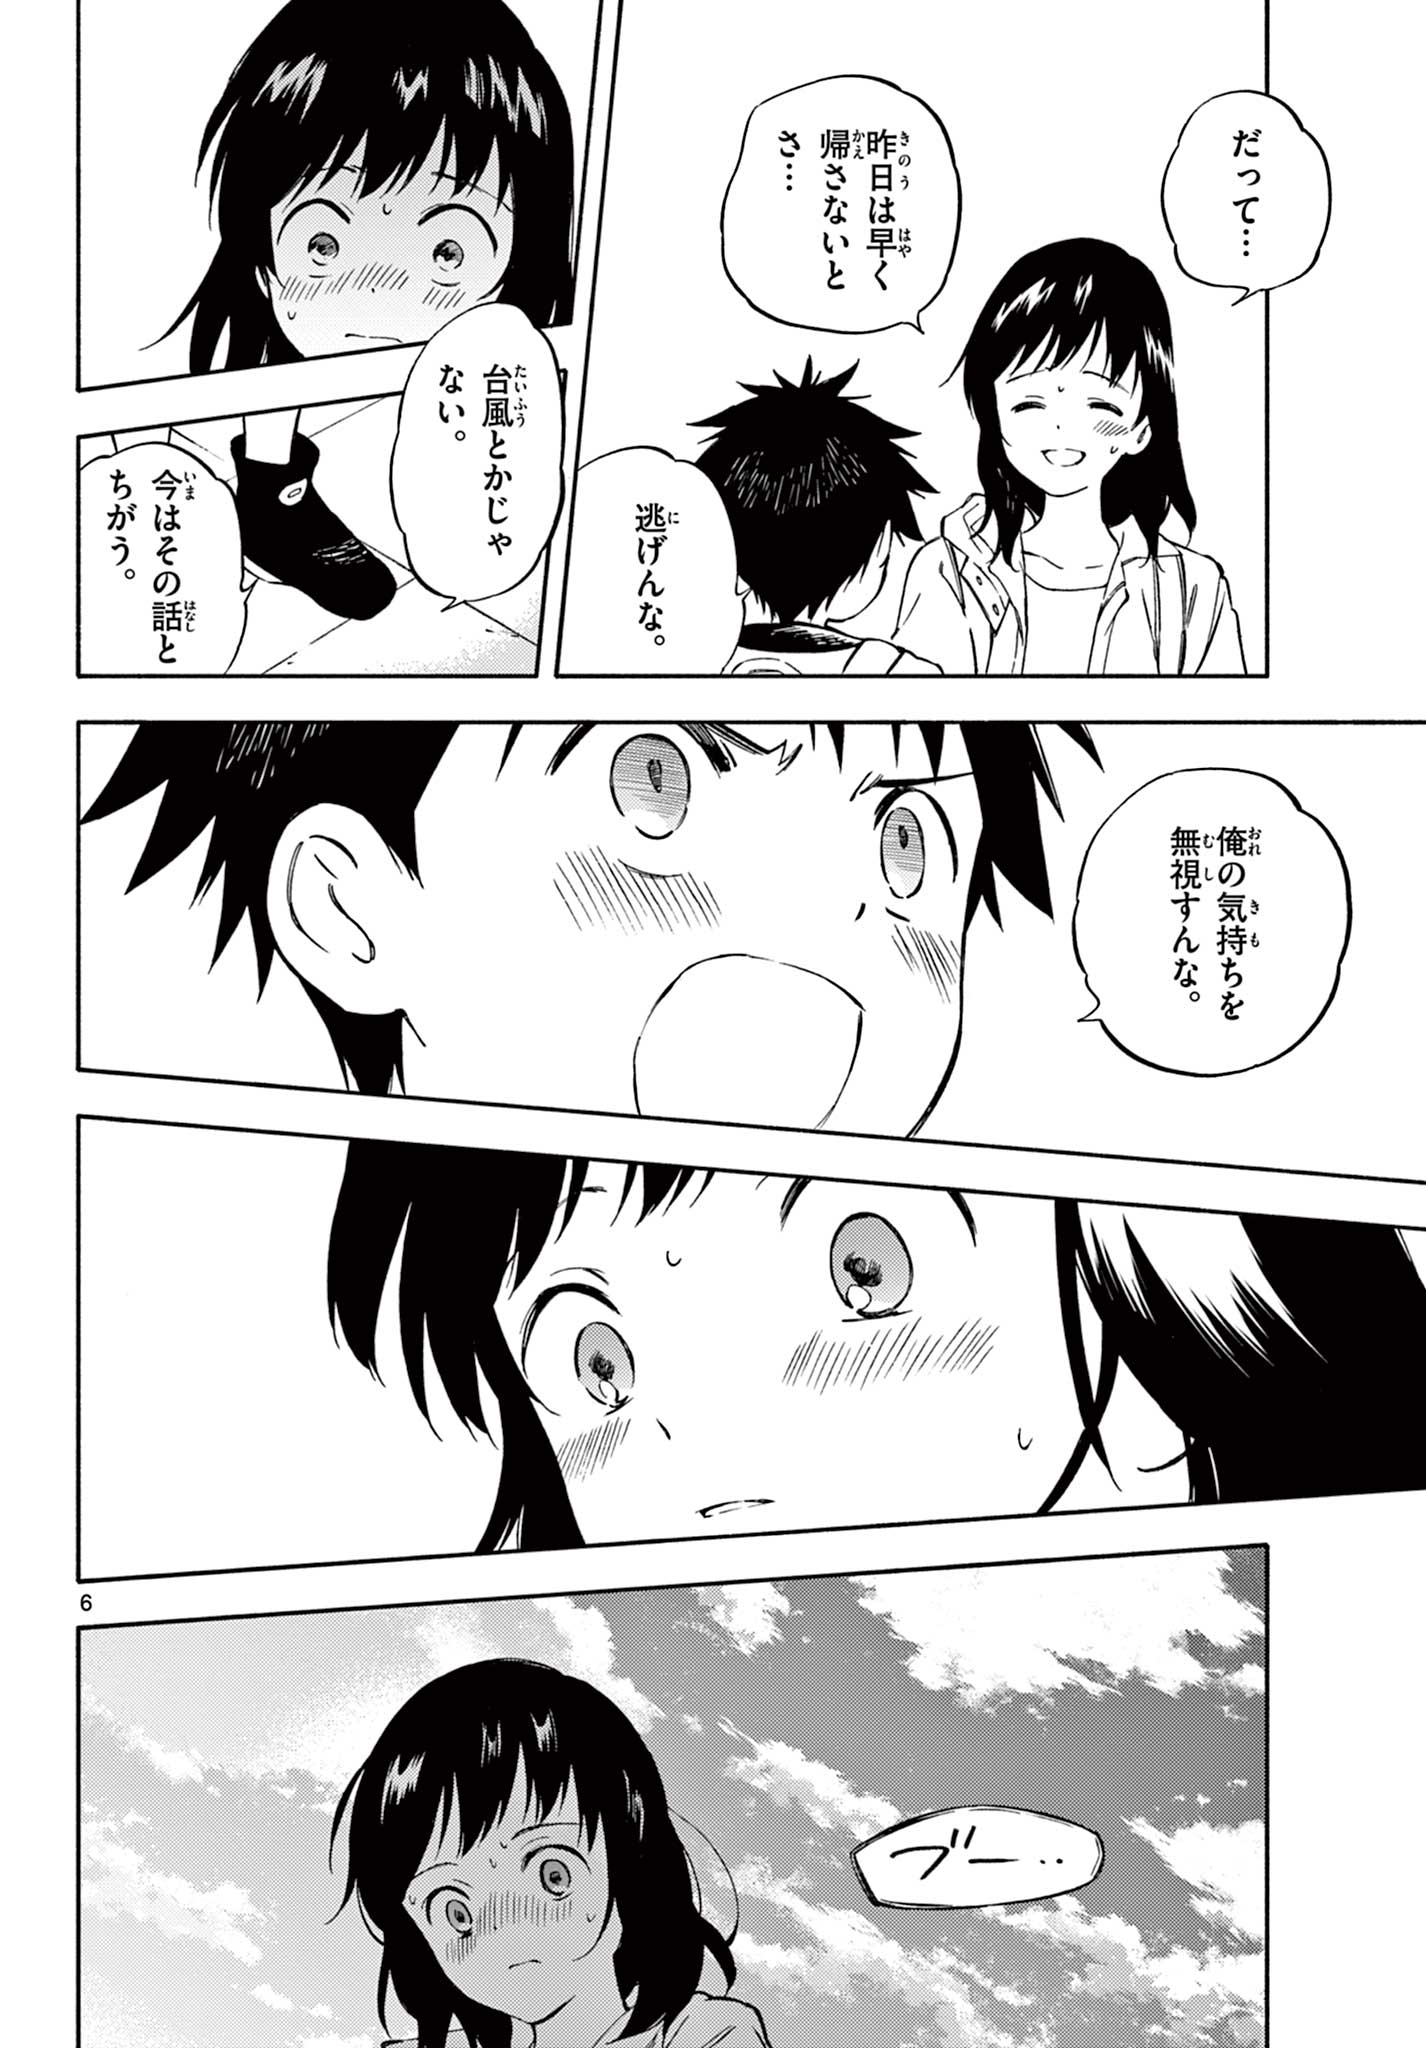 Nami no Shijima no Horizont - Chapter 14.1 - Page 6